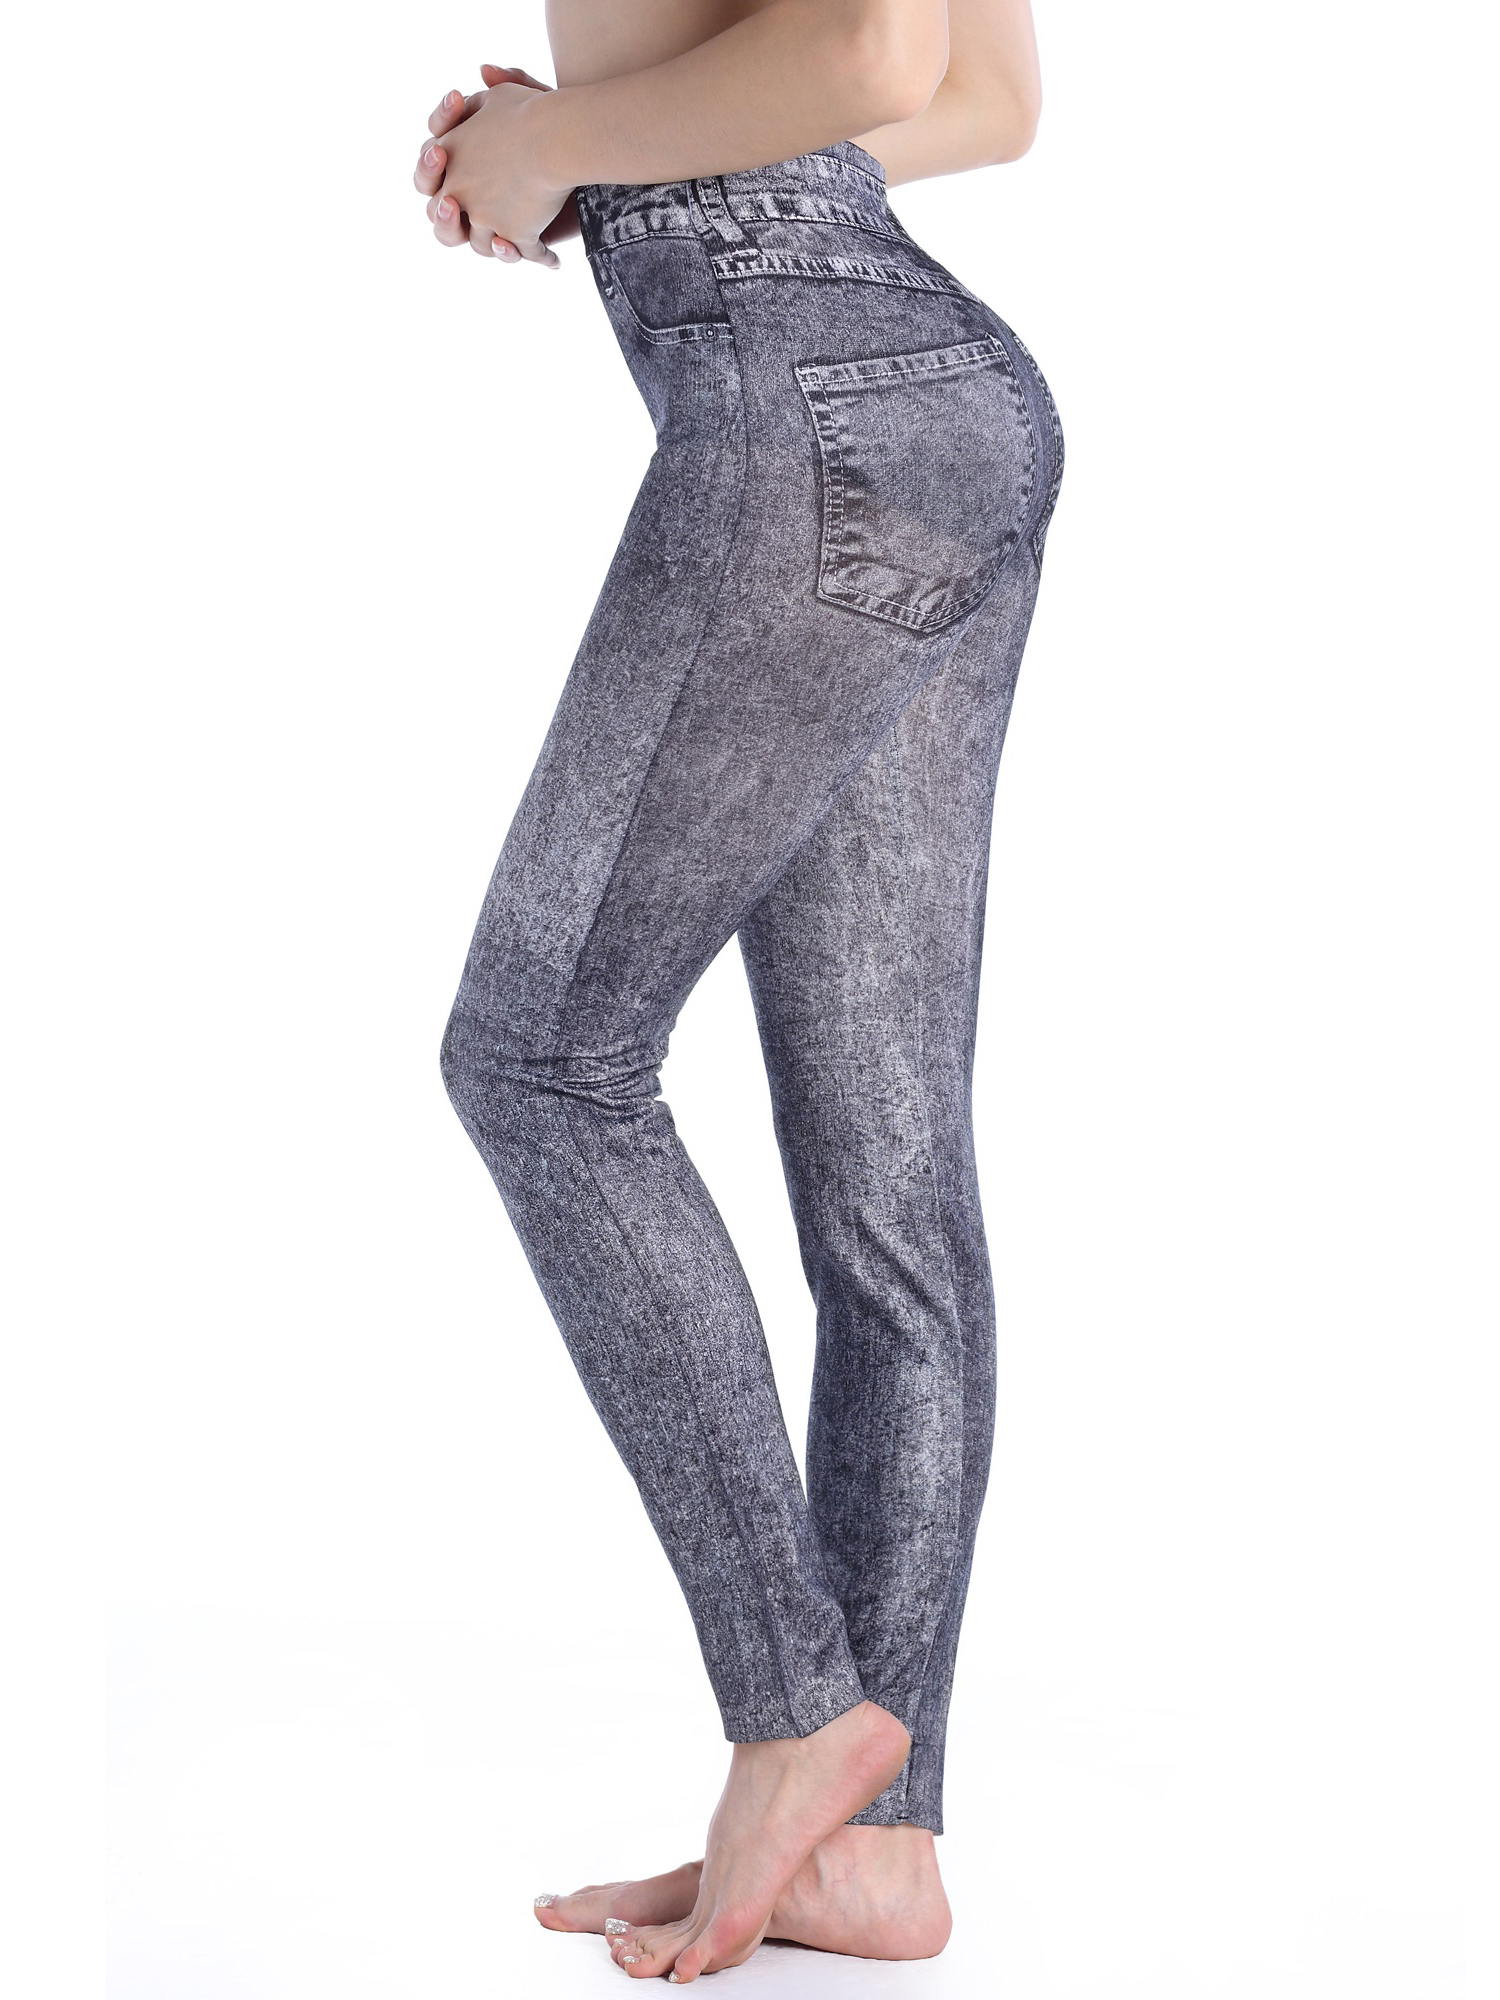 DODOING Women Skinny Leggings Slim Denim Look Jeans Jeggings Stretchy Pants Trousers Pencil Jeans Printed Leggings - image 2 of 3